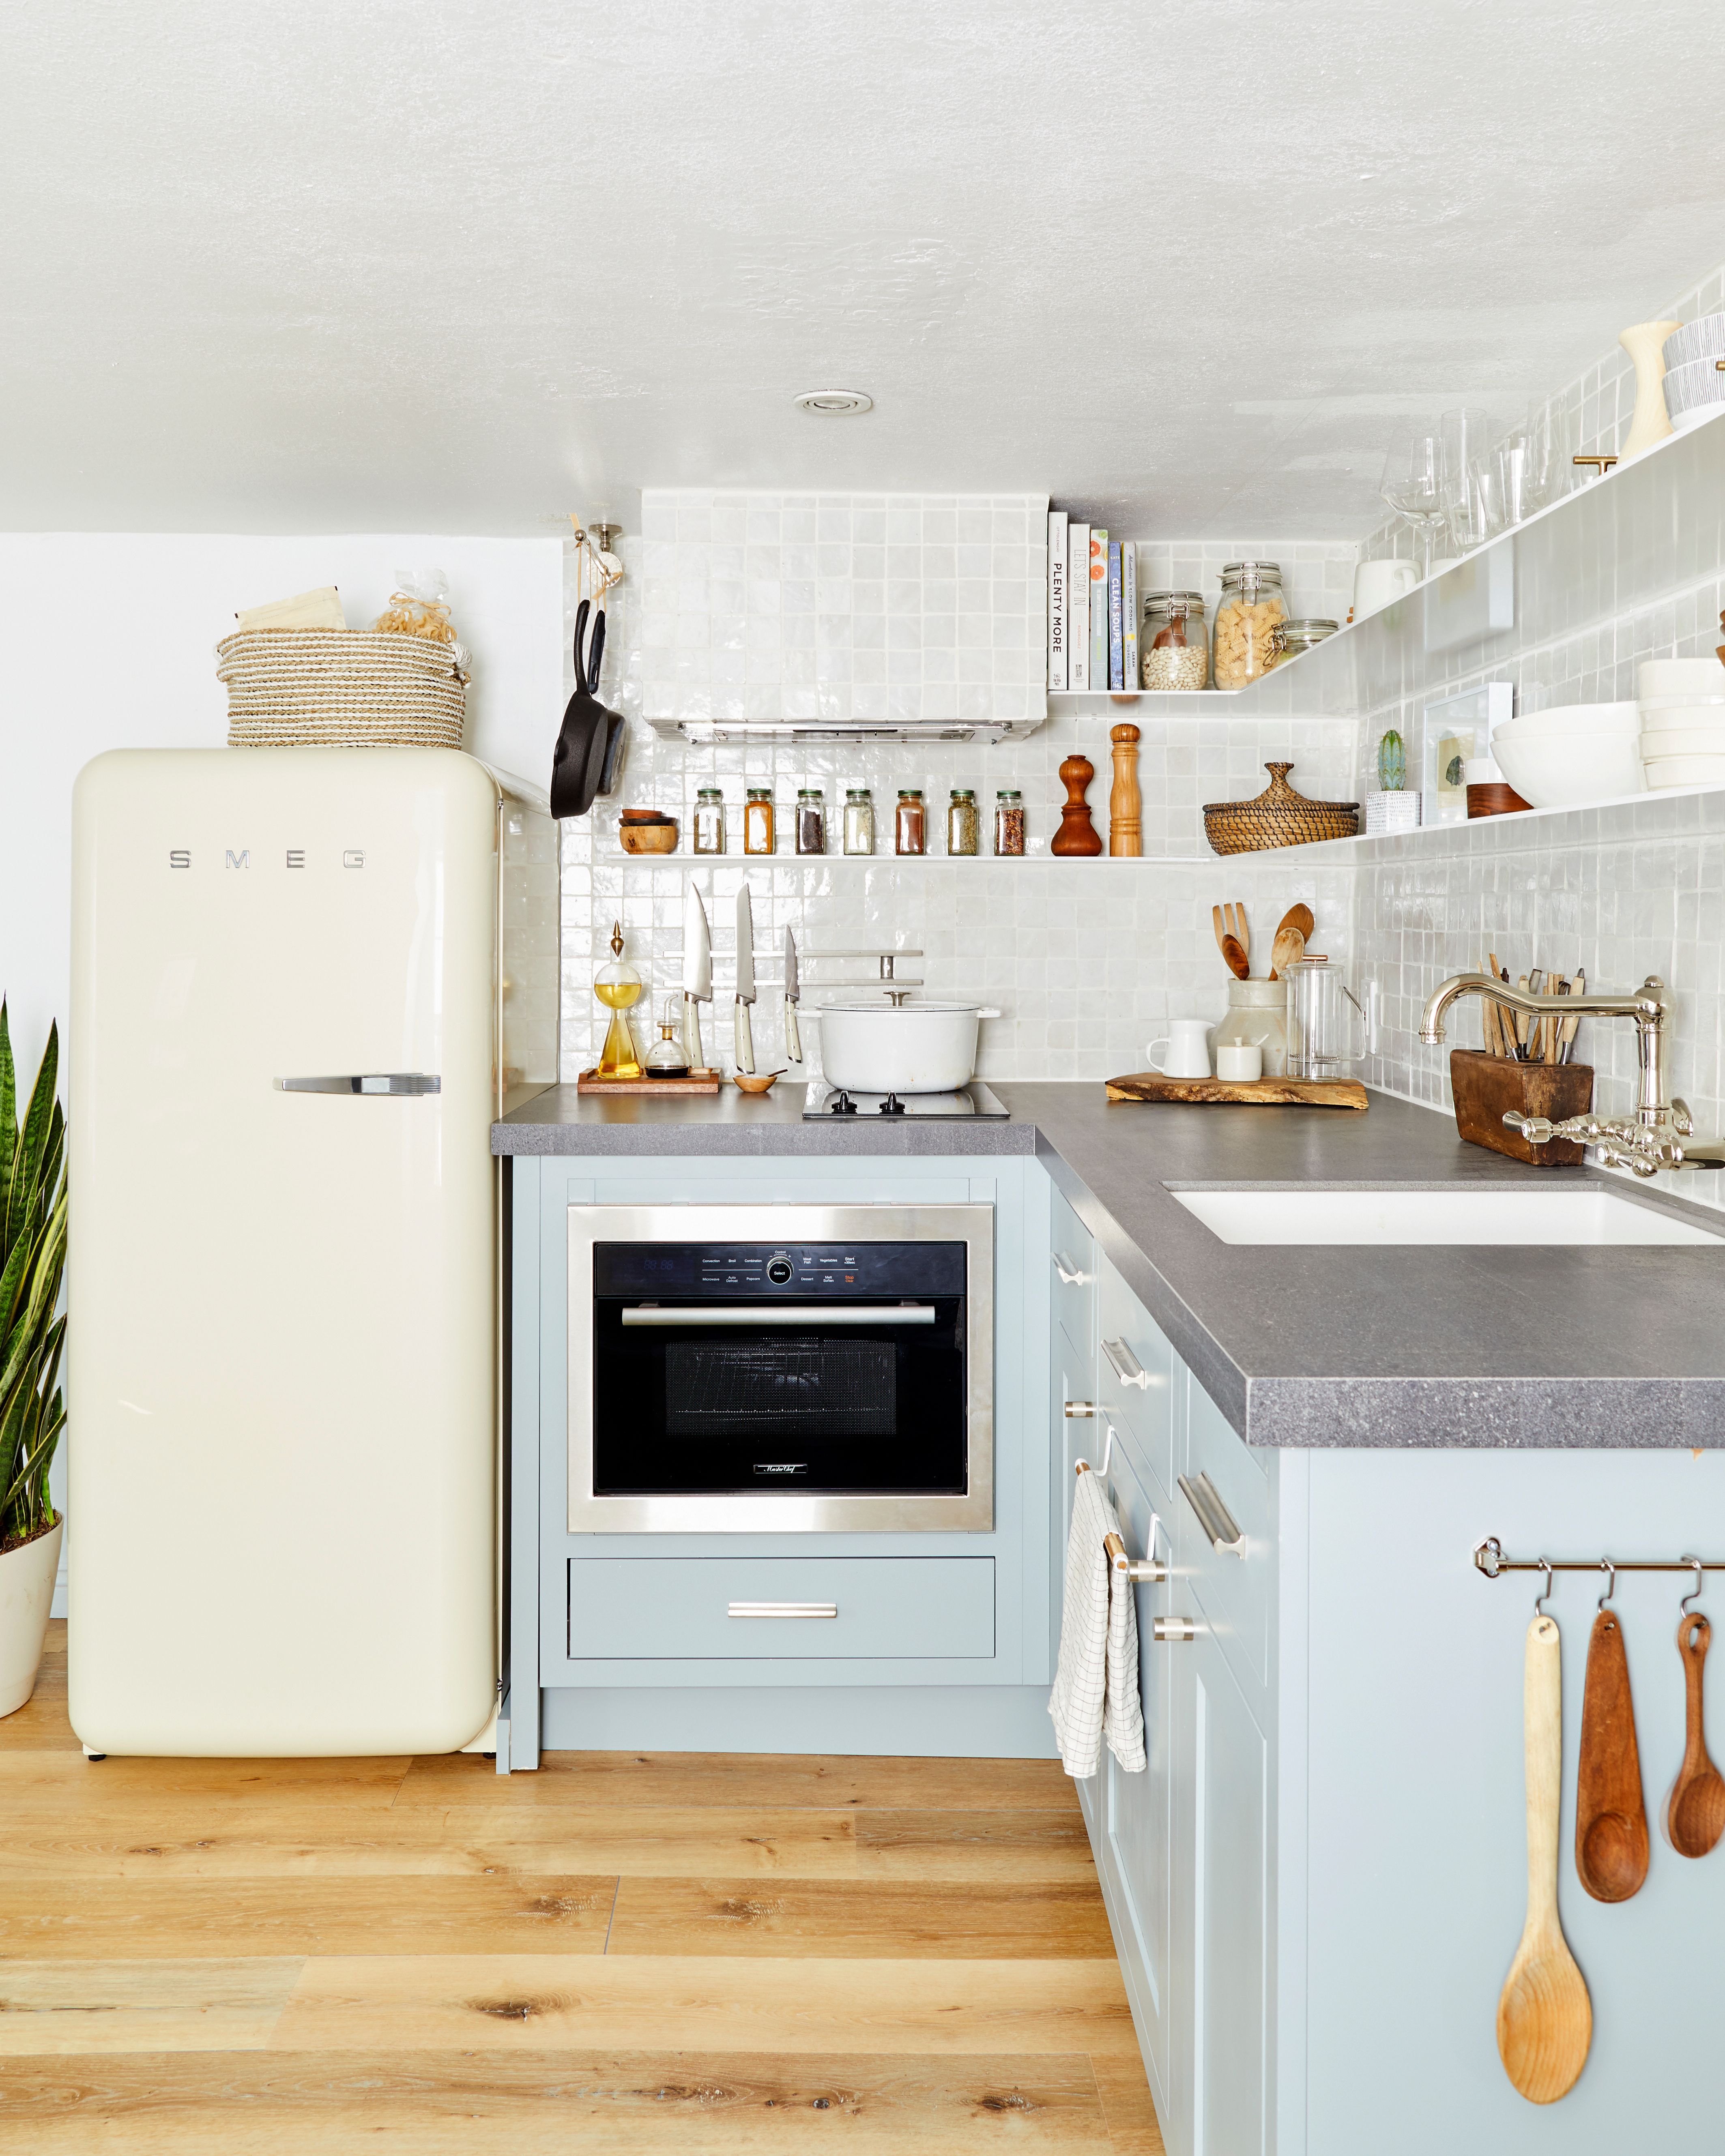 8 Best Small Kitchen Design Ideas - Small Kitchen Layout Photos